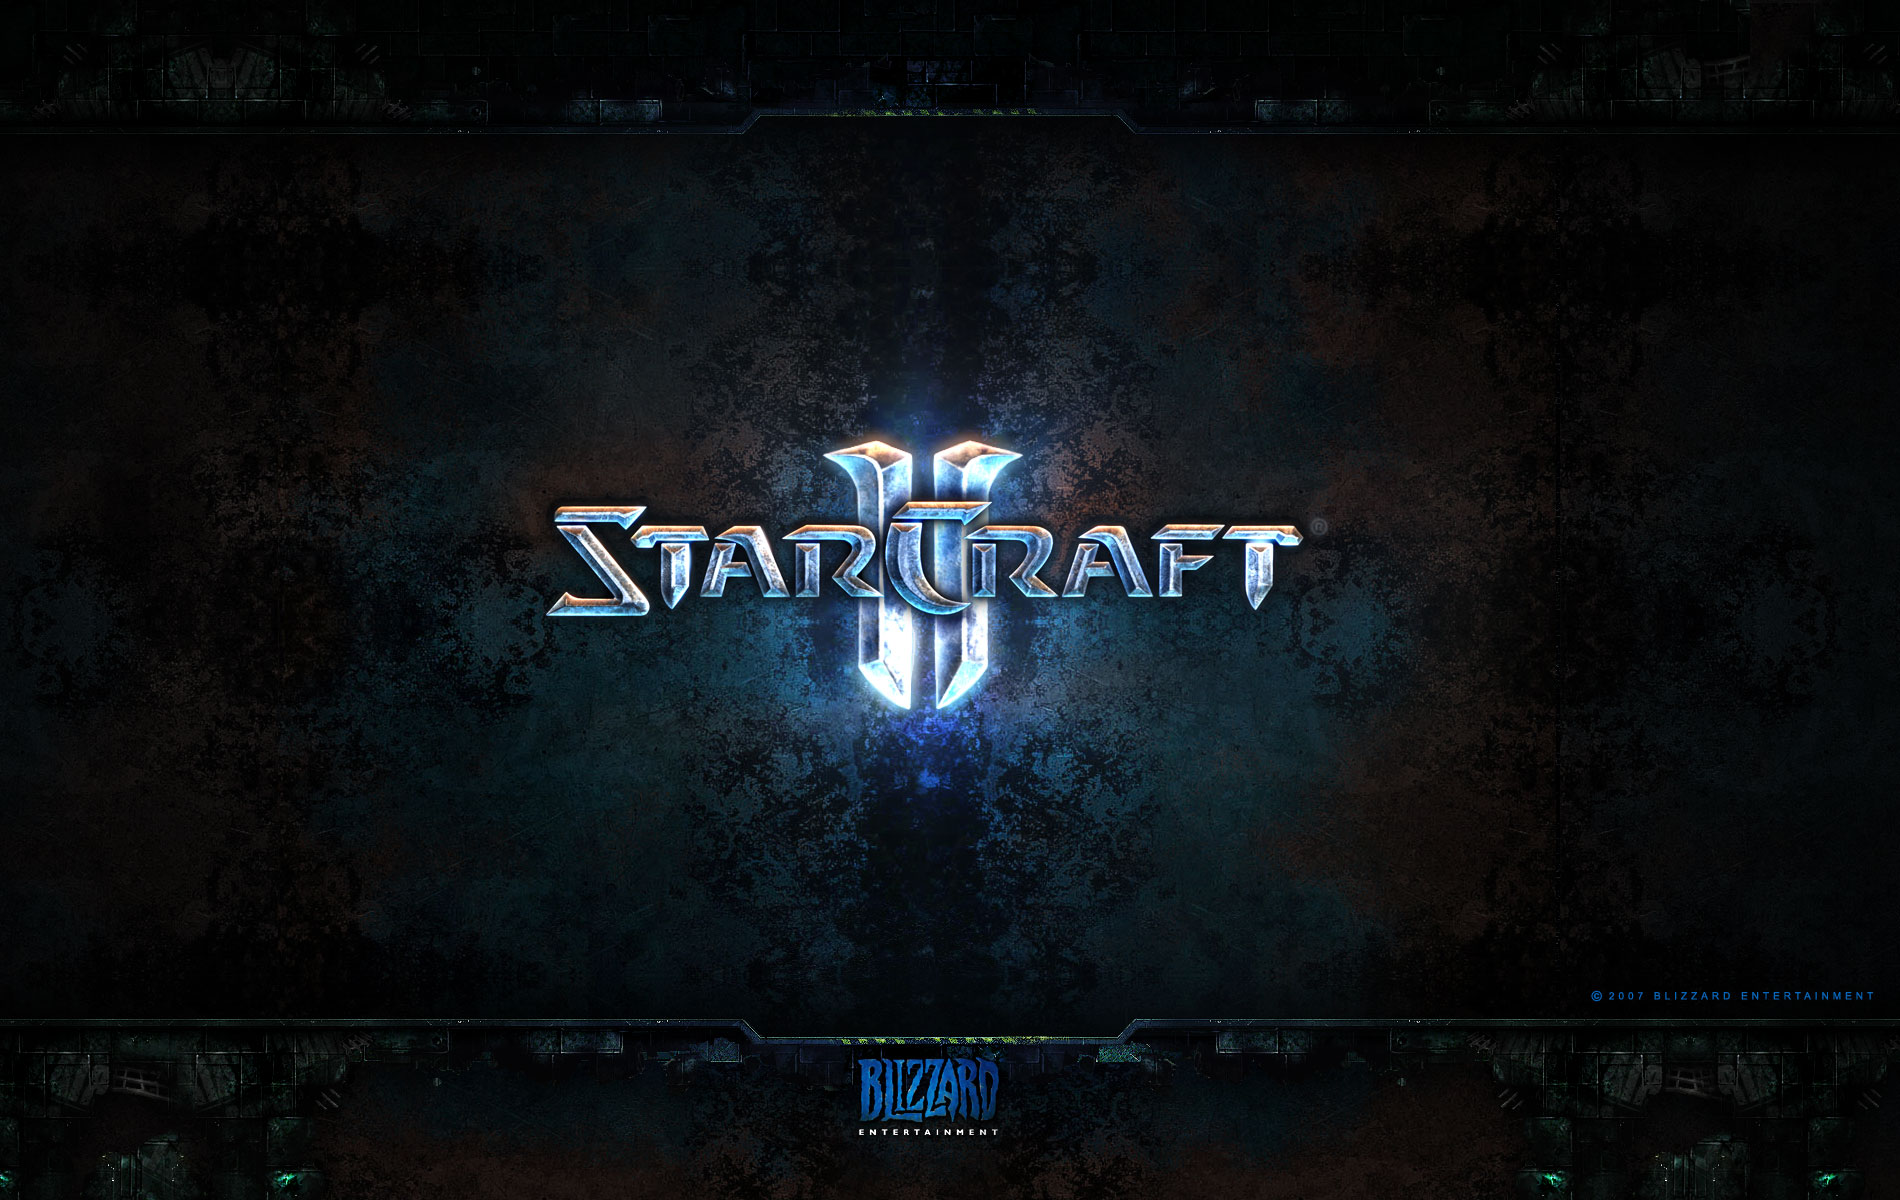 180 Starcraft HD Wallpapers Backgrounds - Wallpaper Abyss